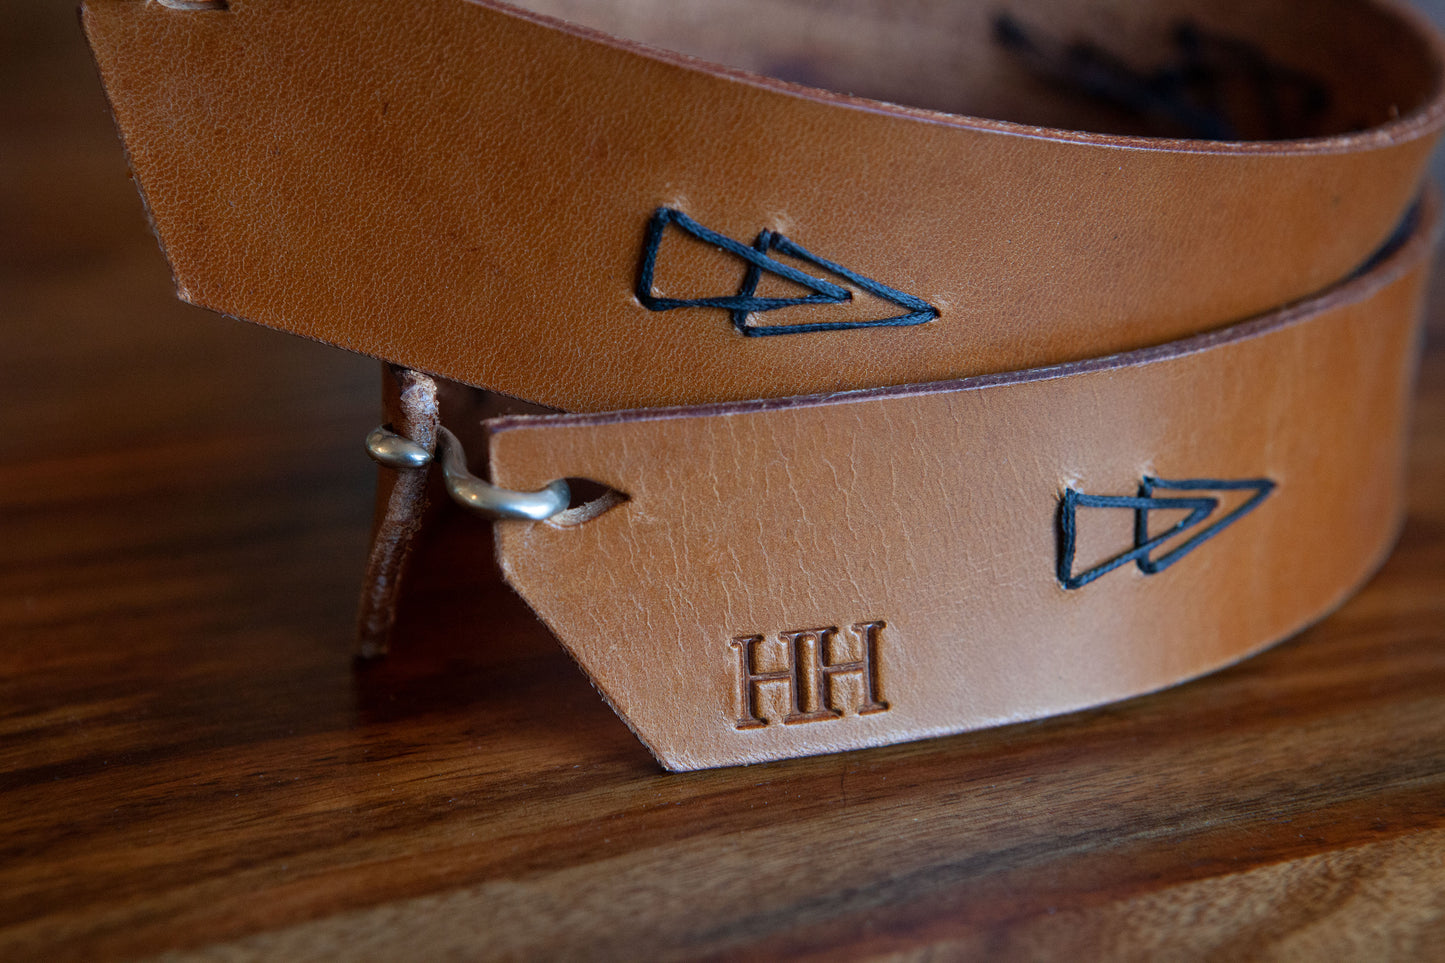 Sahara - Handmade Premium Leather Boot Cuffs by Hoof & Heel